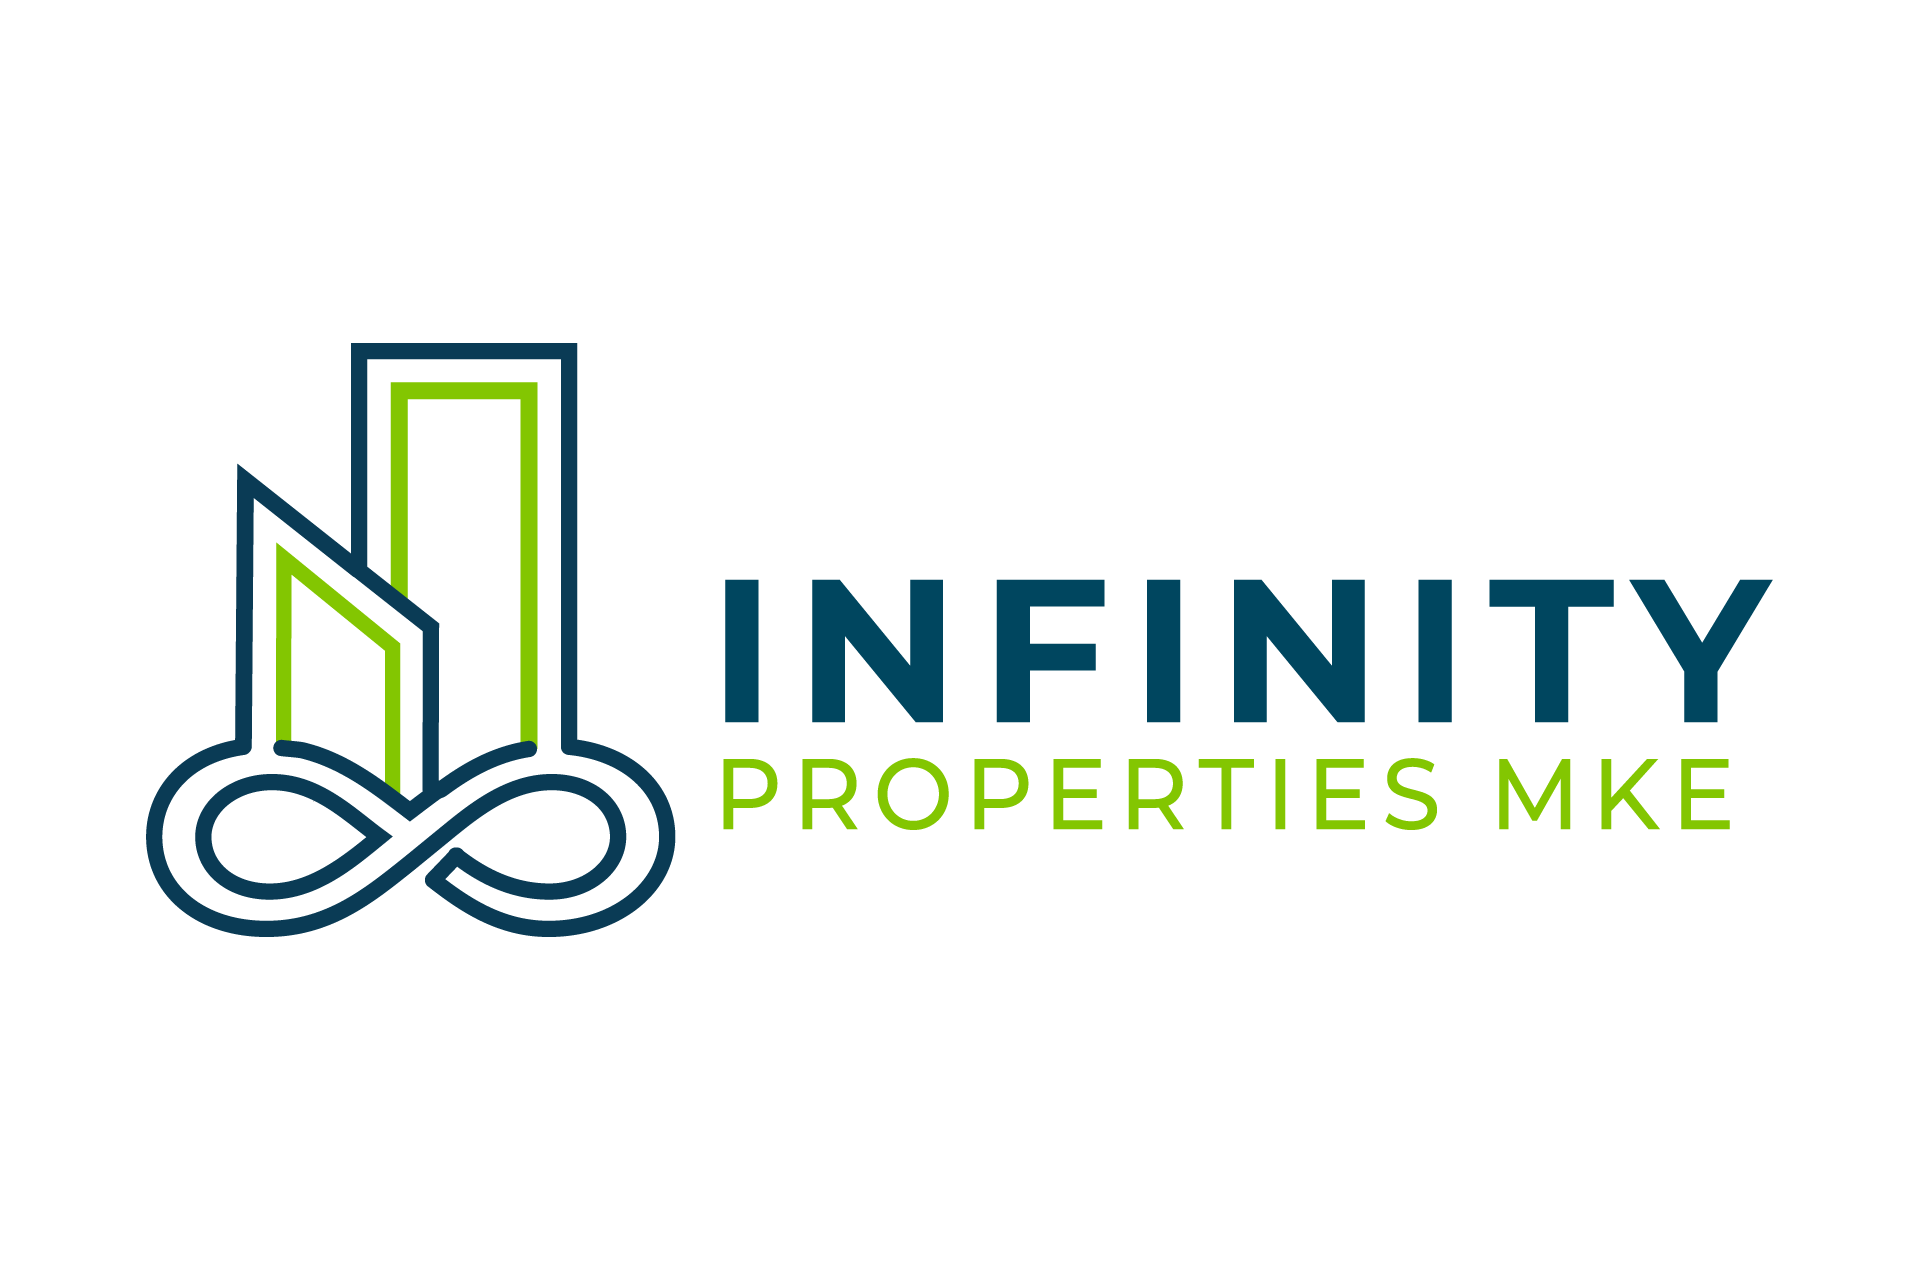 Kerry Properties logo in transparent PNG format